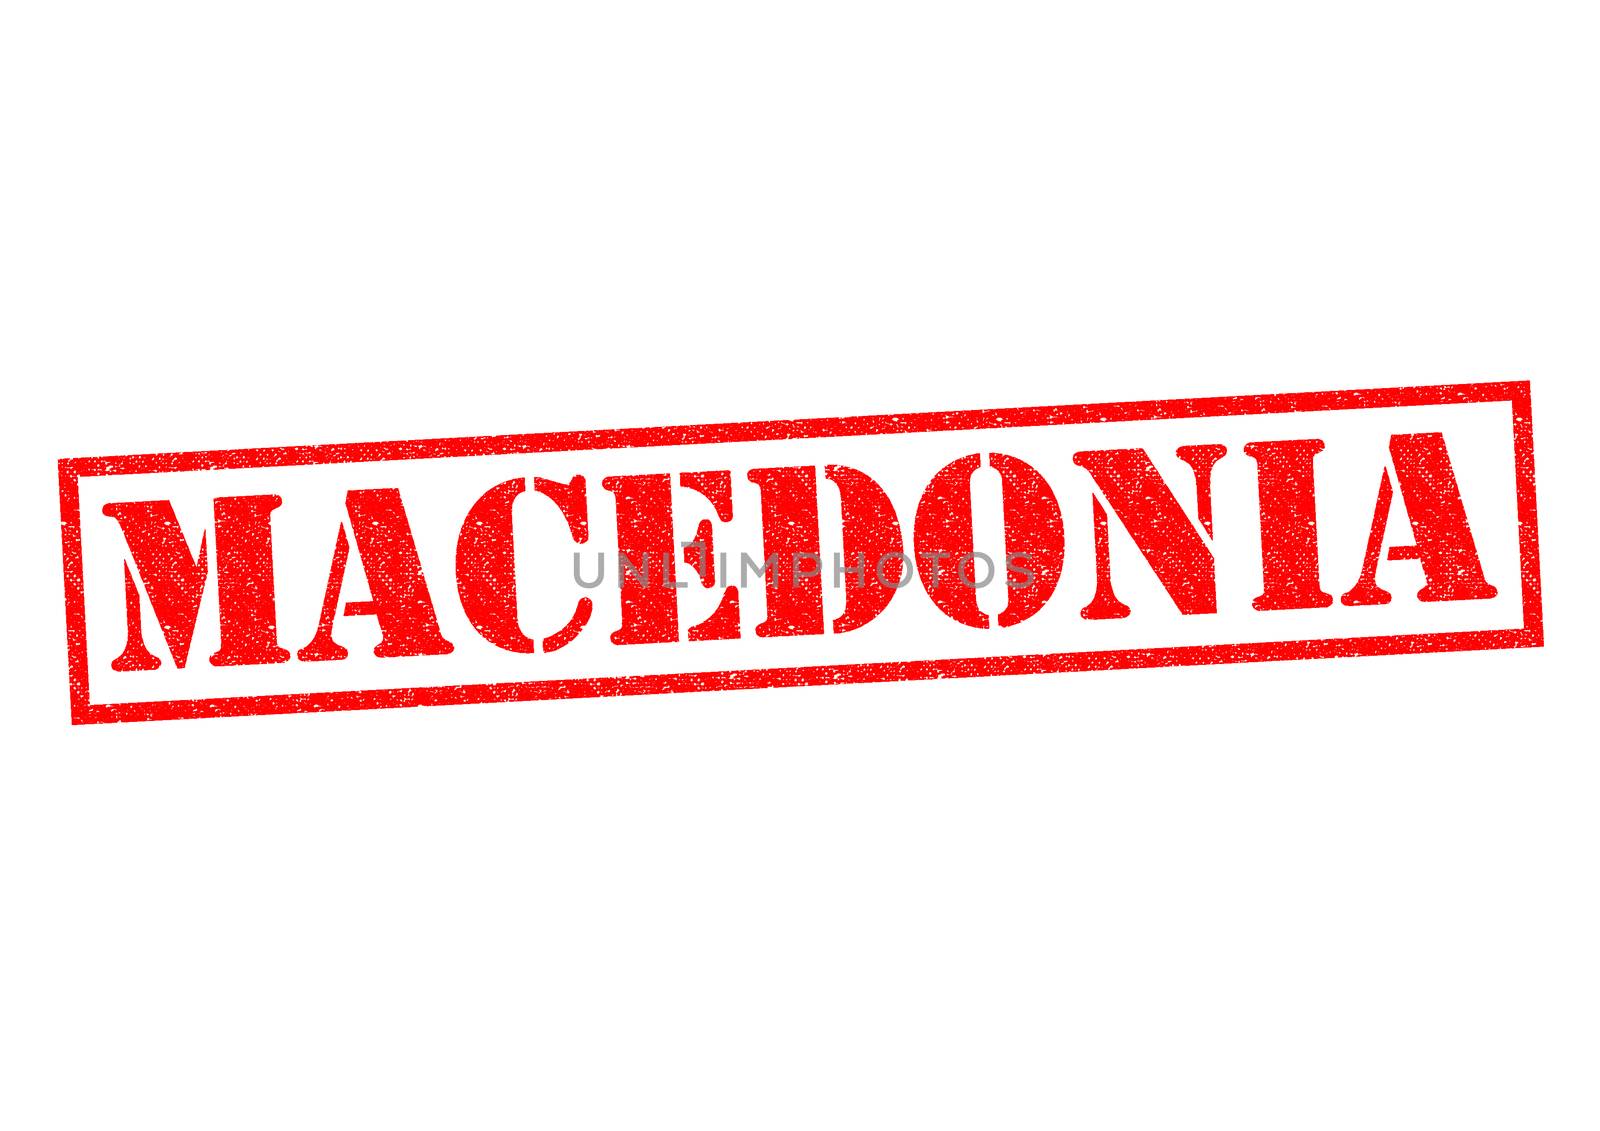 MACEDONIA by chrisdorney